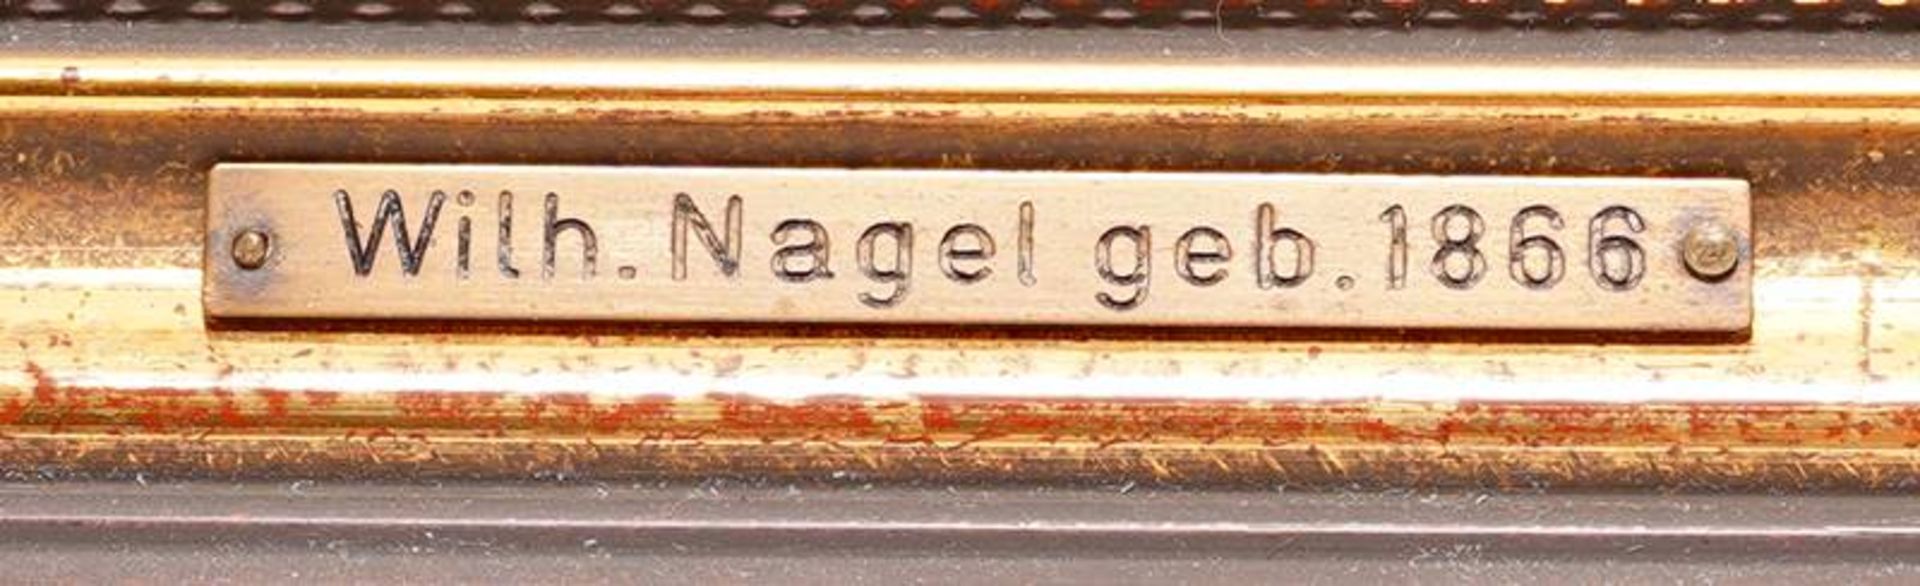 Nagel, Wilhelm - Image 4 of 4